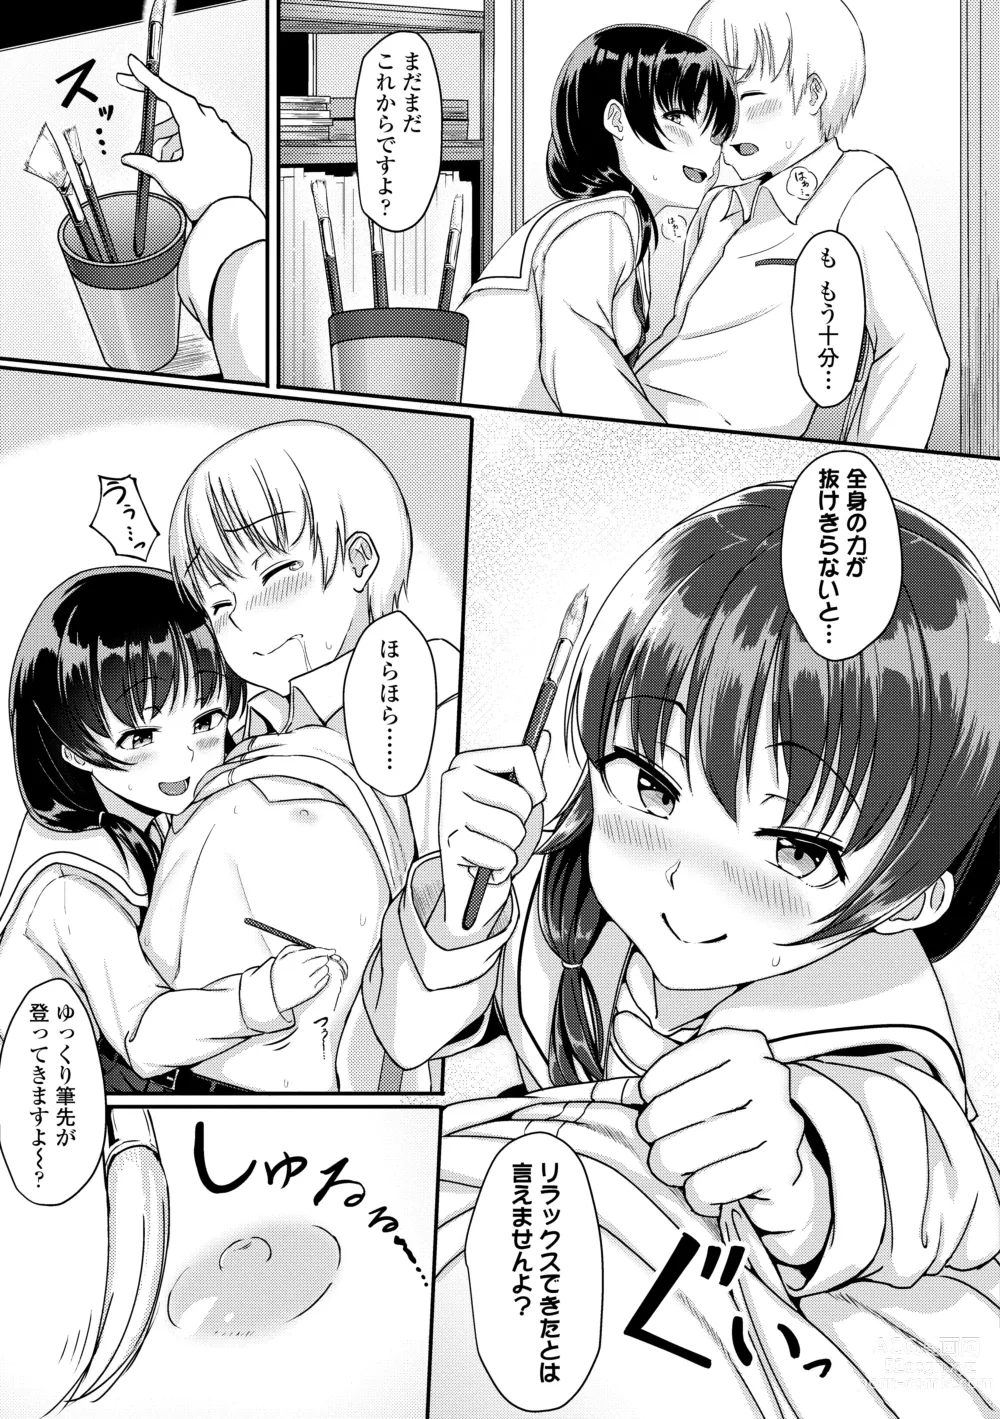 Page 187 of manga Ijiwaru Connect